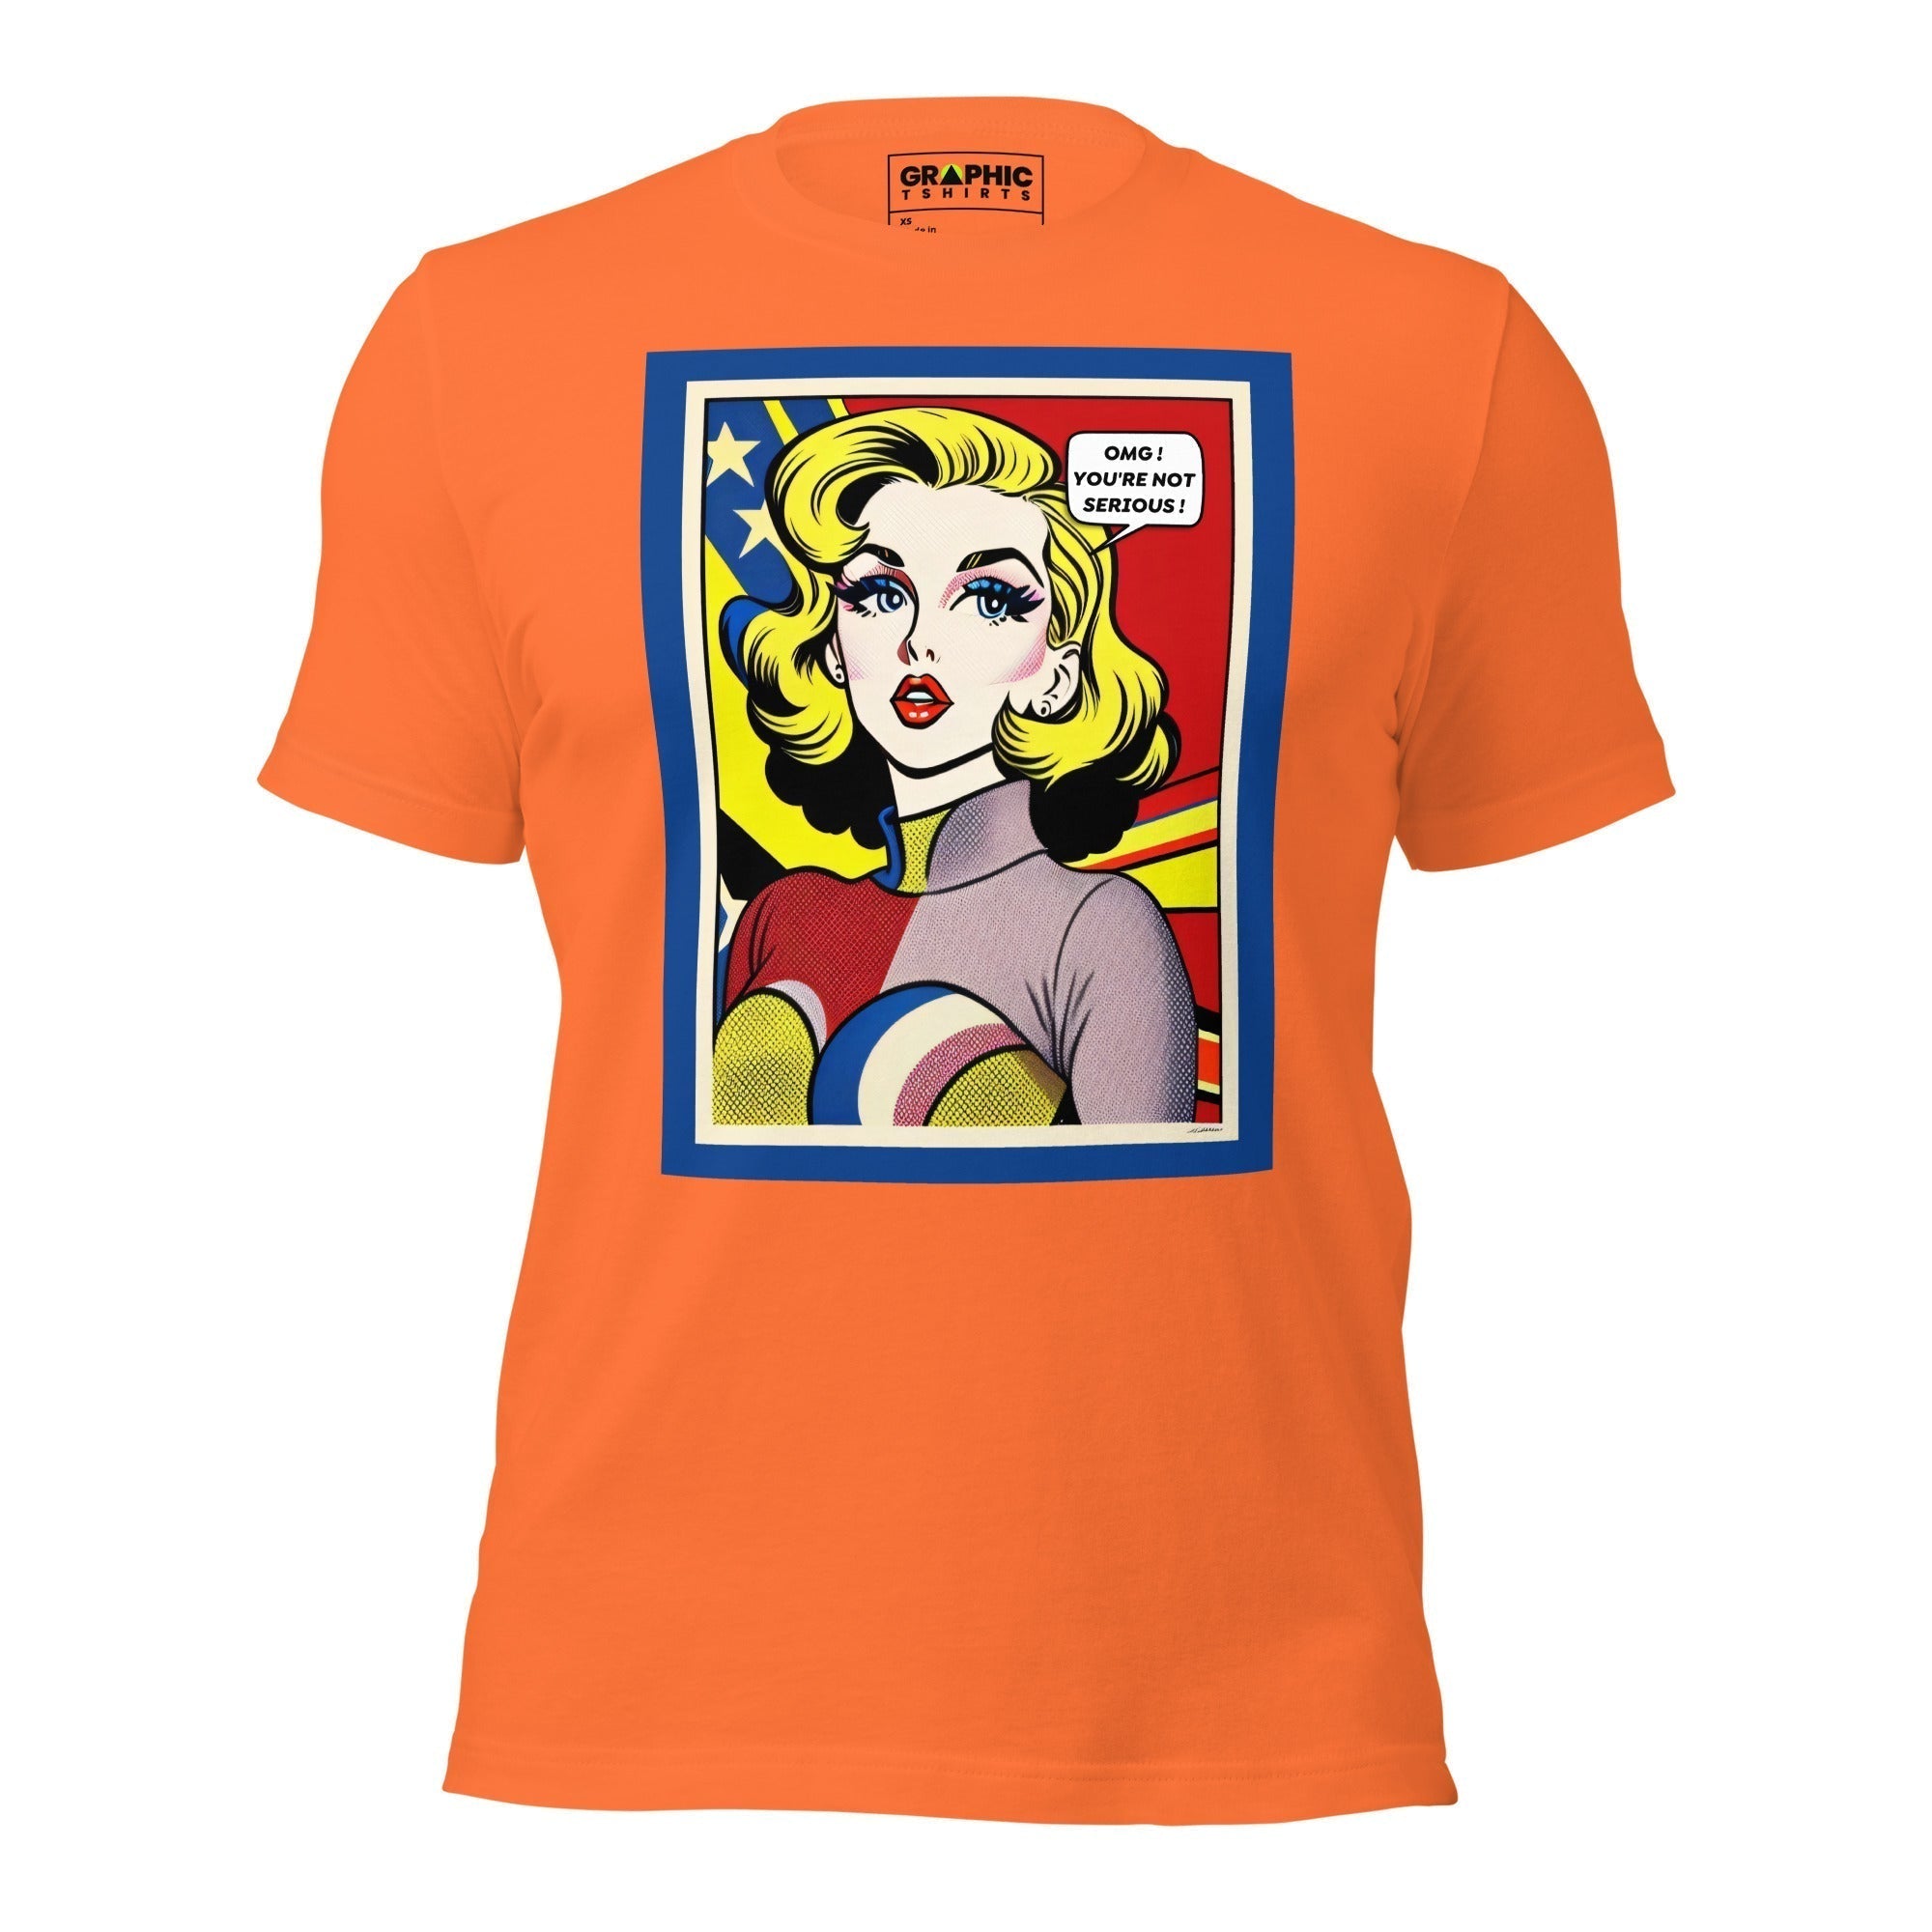 Unisex Crew Neck T-Shirt - Vintage American Comic Series v.39 - GRAPHIC T-SHIRTS